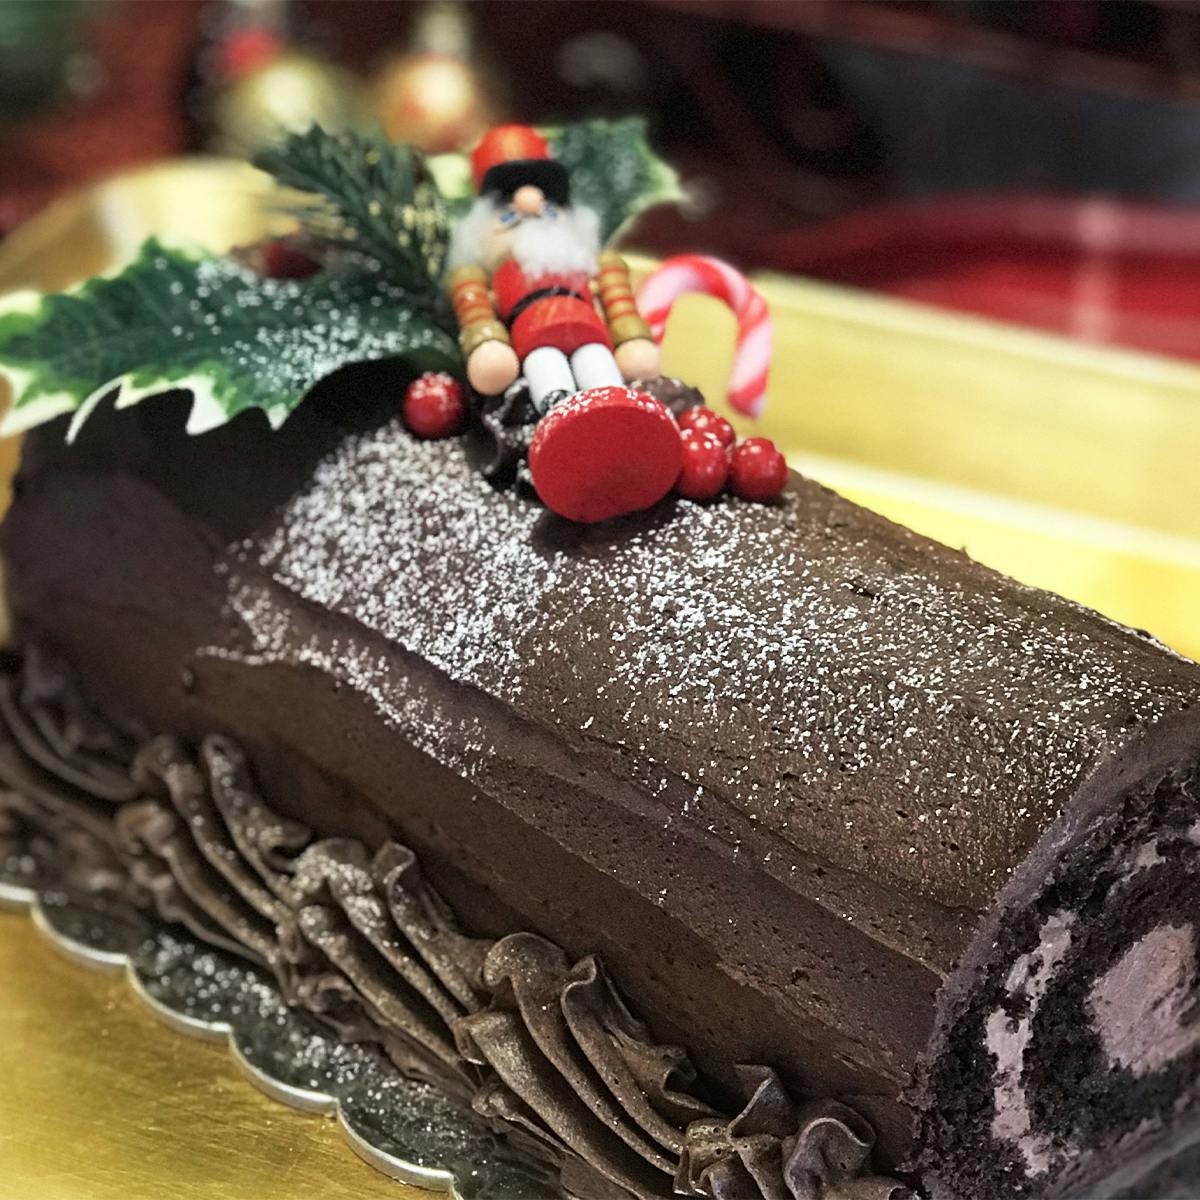 Christmas Yule Log Cake Recipe (Bûche de Noël) - Chef Billy Parisi